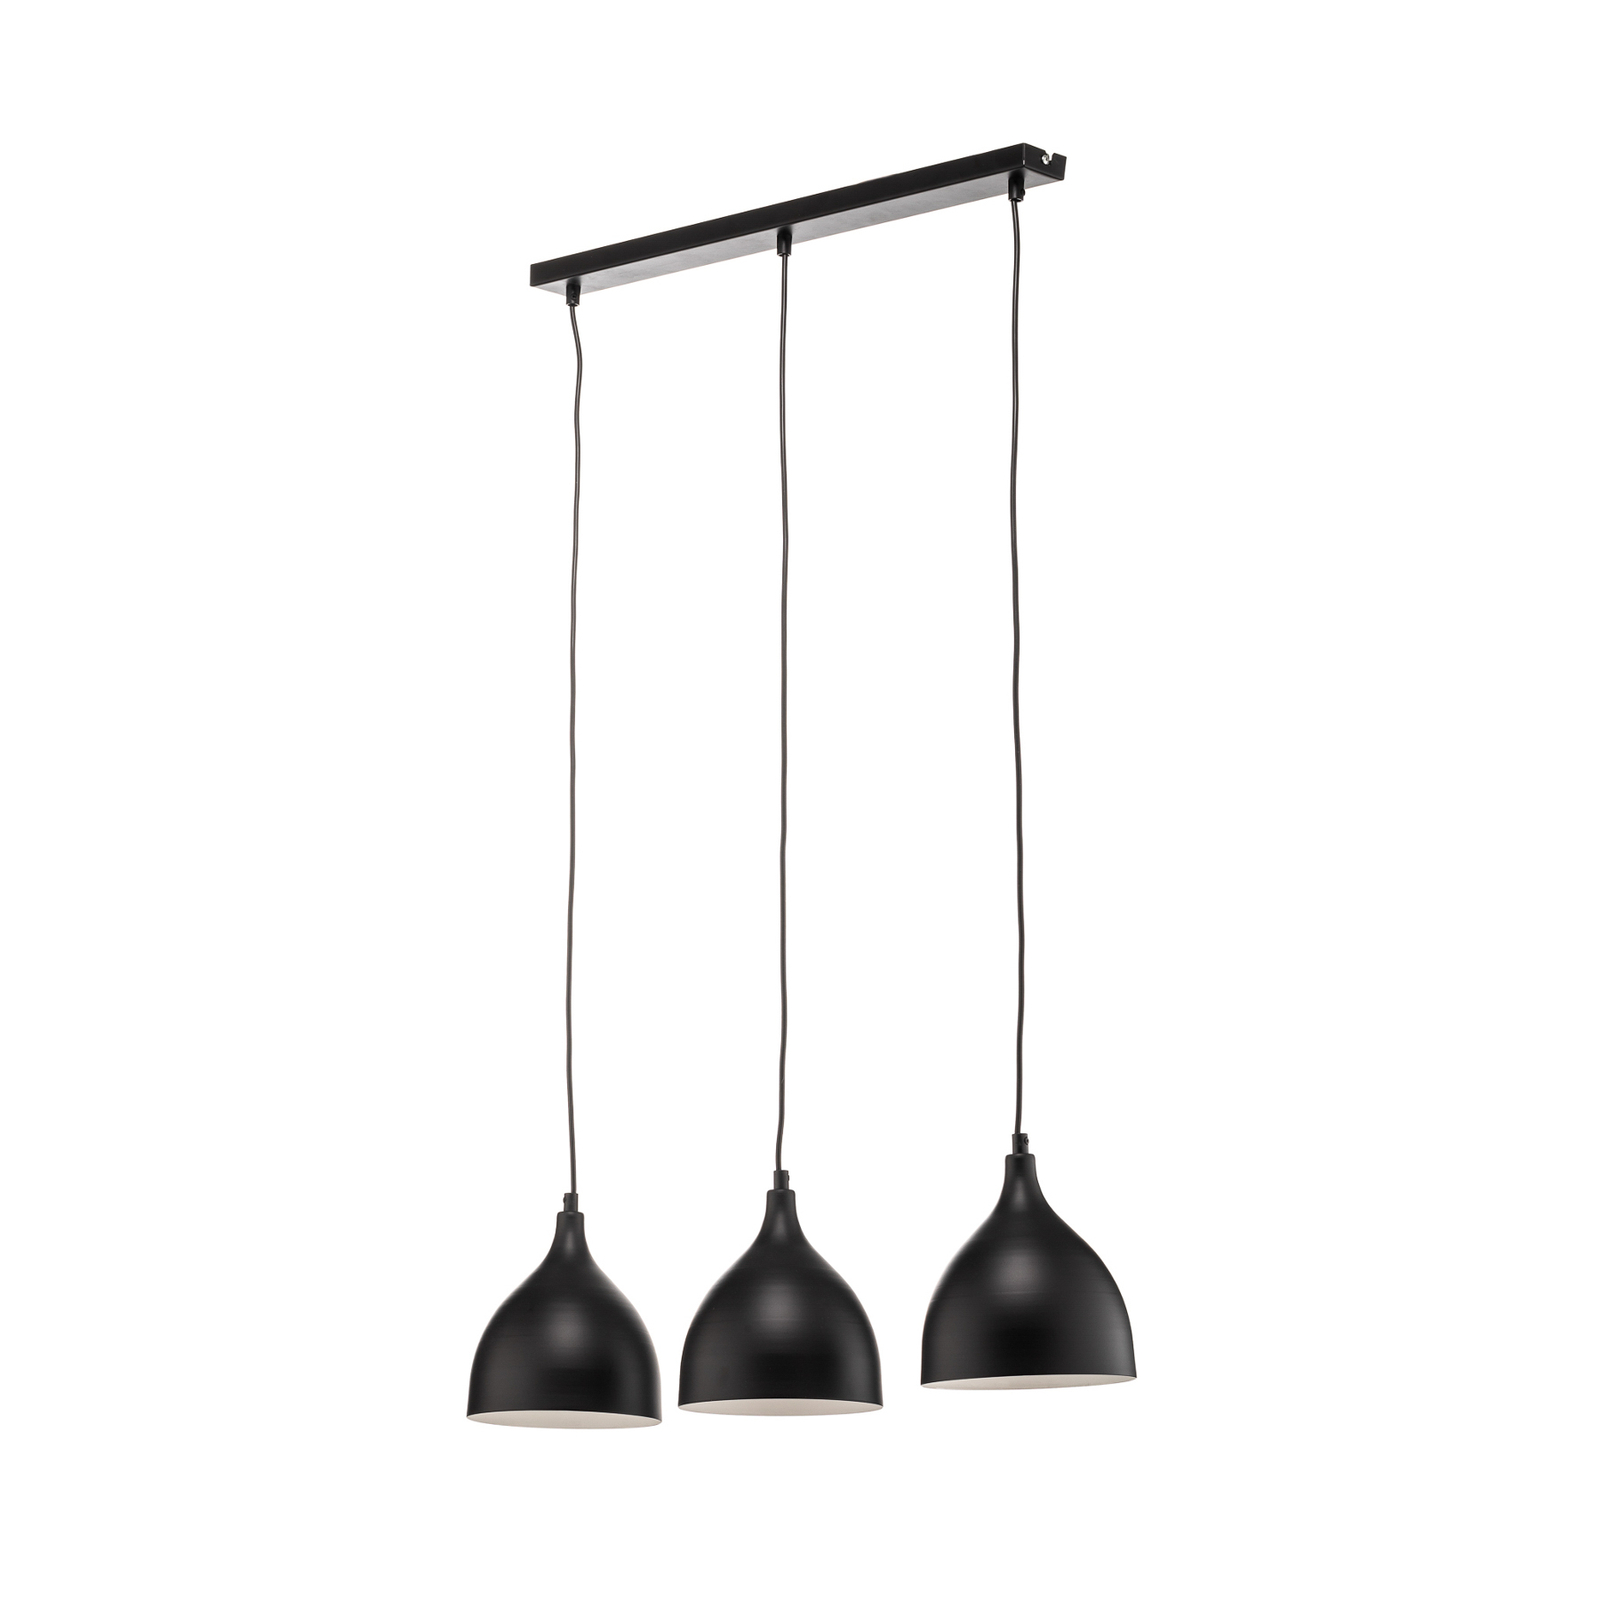 Nanu metalen hanglamp, zwart, 3-lamps